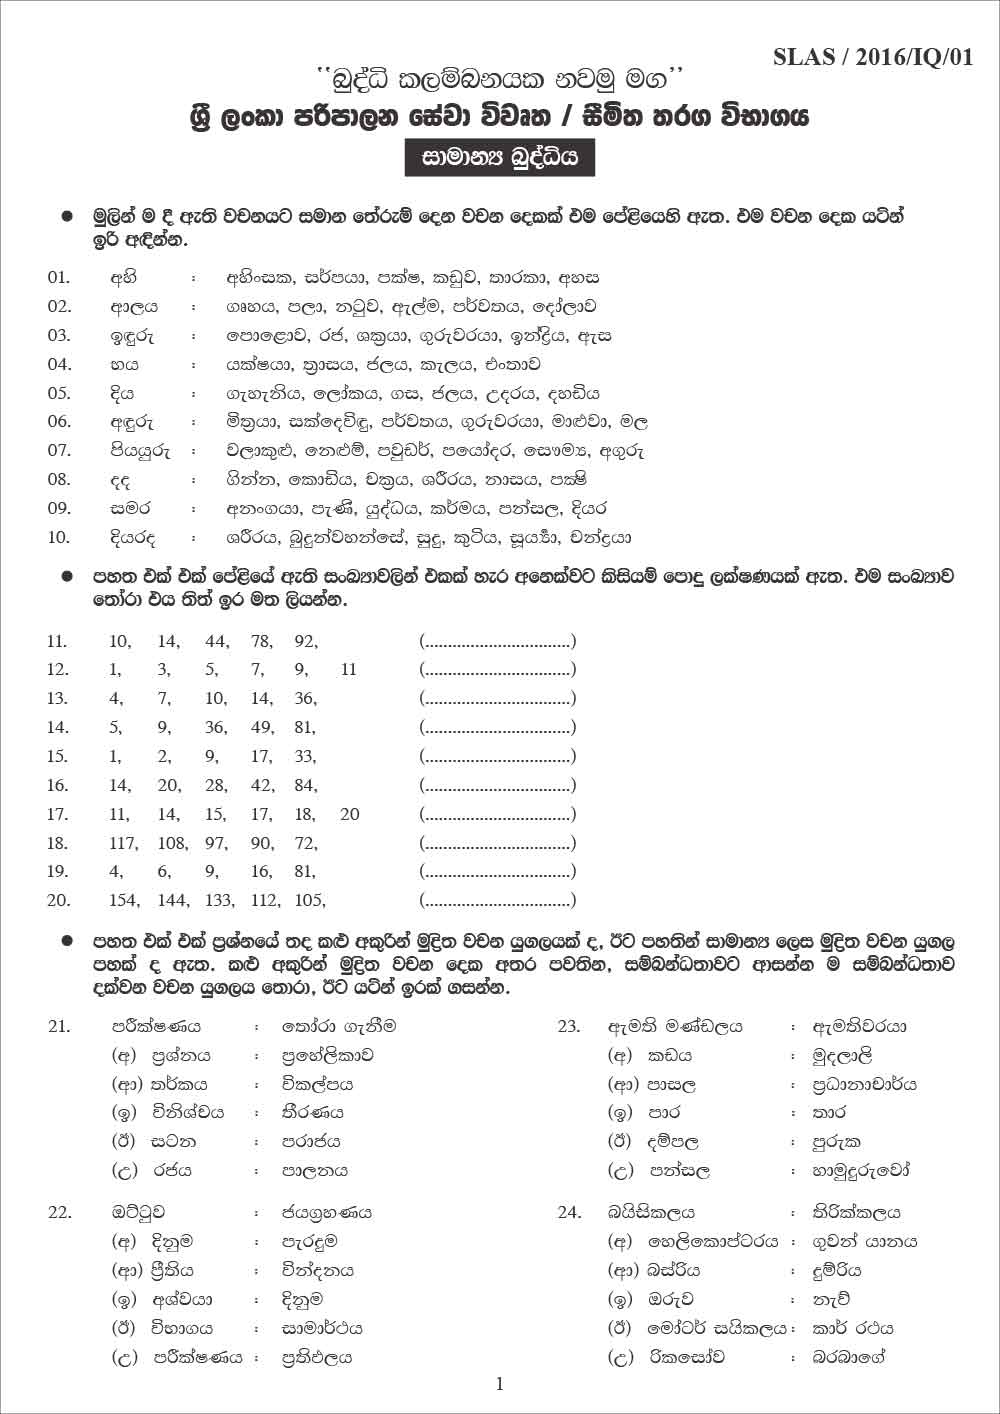 SLAS Pass Paper 01 by Anusha Gokula - General Knowledge in Sinhala 